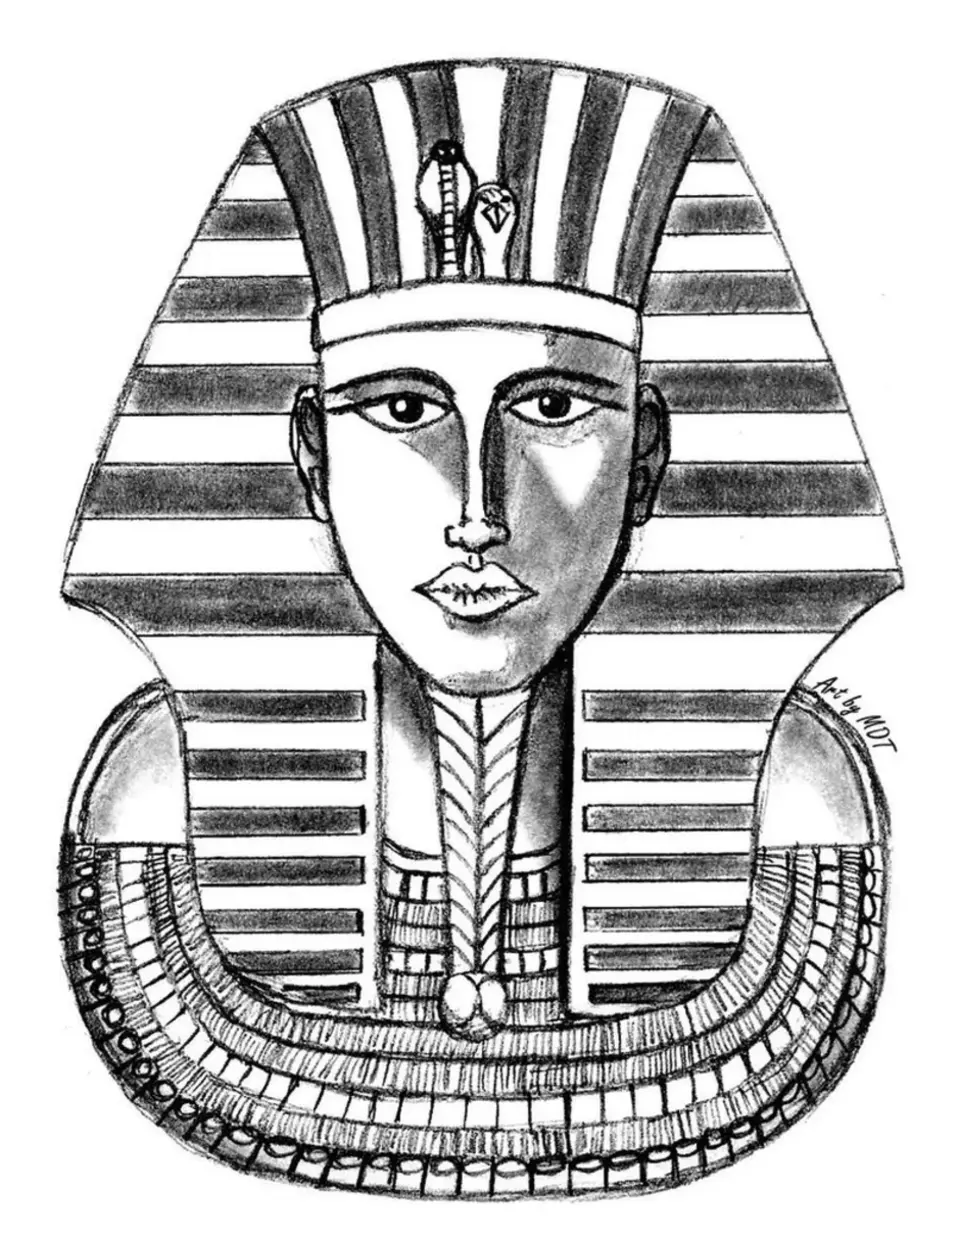 Маска тутанхамона 5 класс. Фараон Египта Тутанхамон изо 5 класс. Хеопс и Тутанхамон. Маска Тутанхамона для изо. Маска фараона Тутанхамона изо 5.